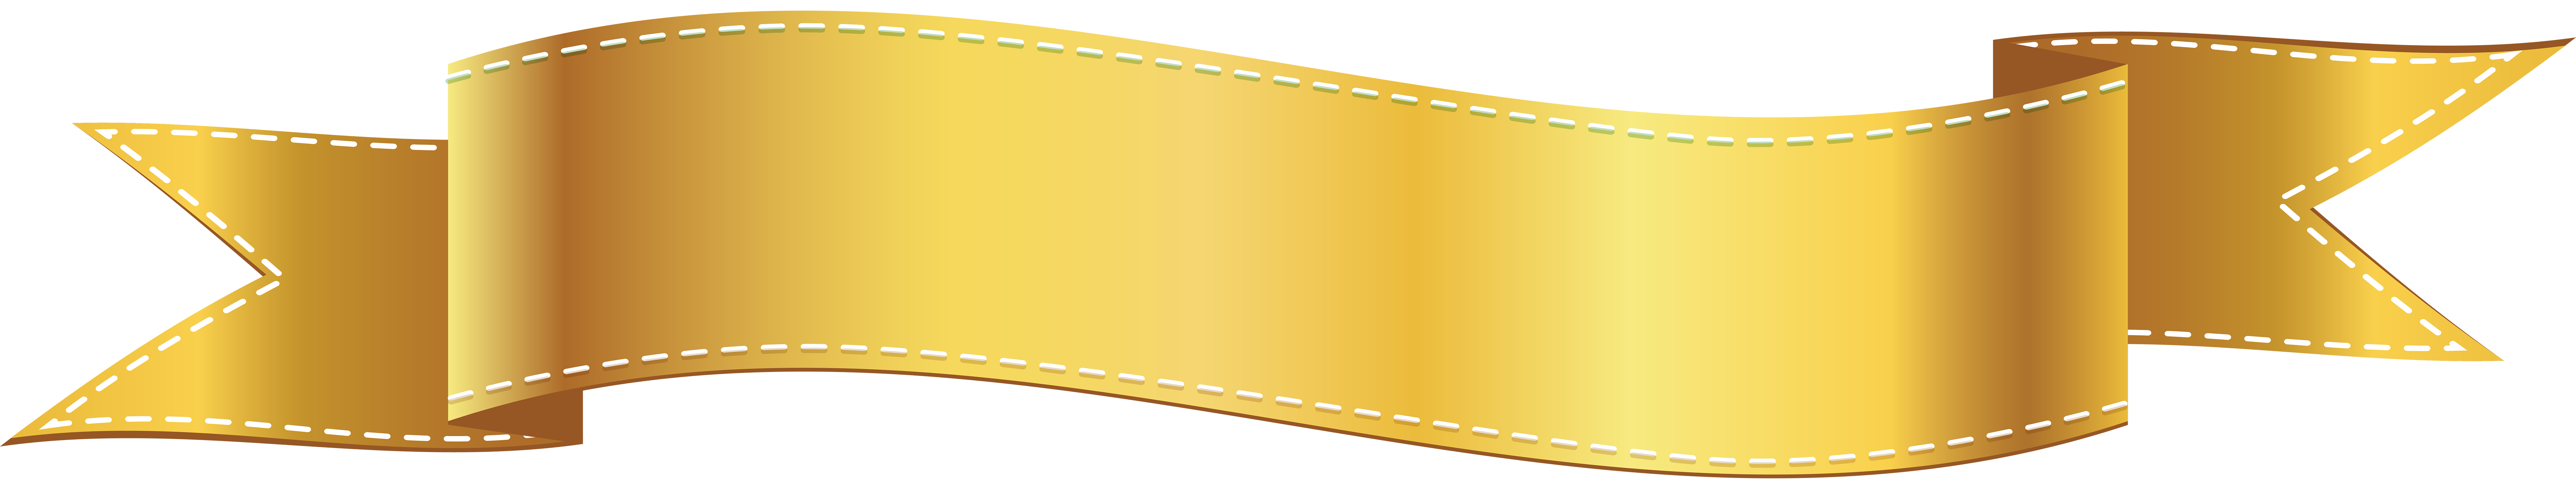 Golden Banner Free PNG Image